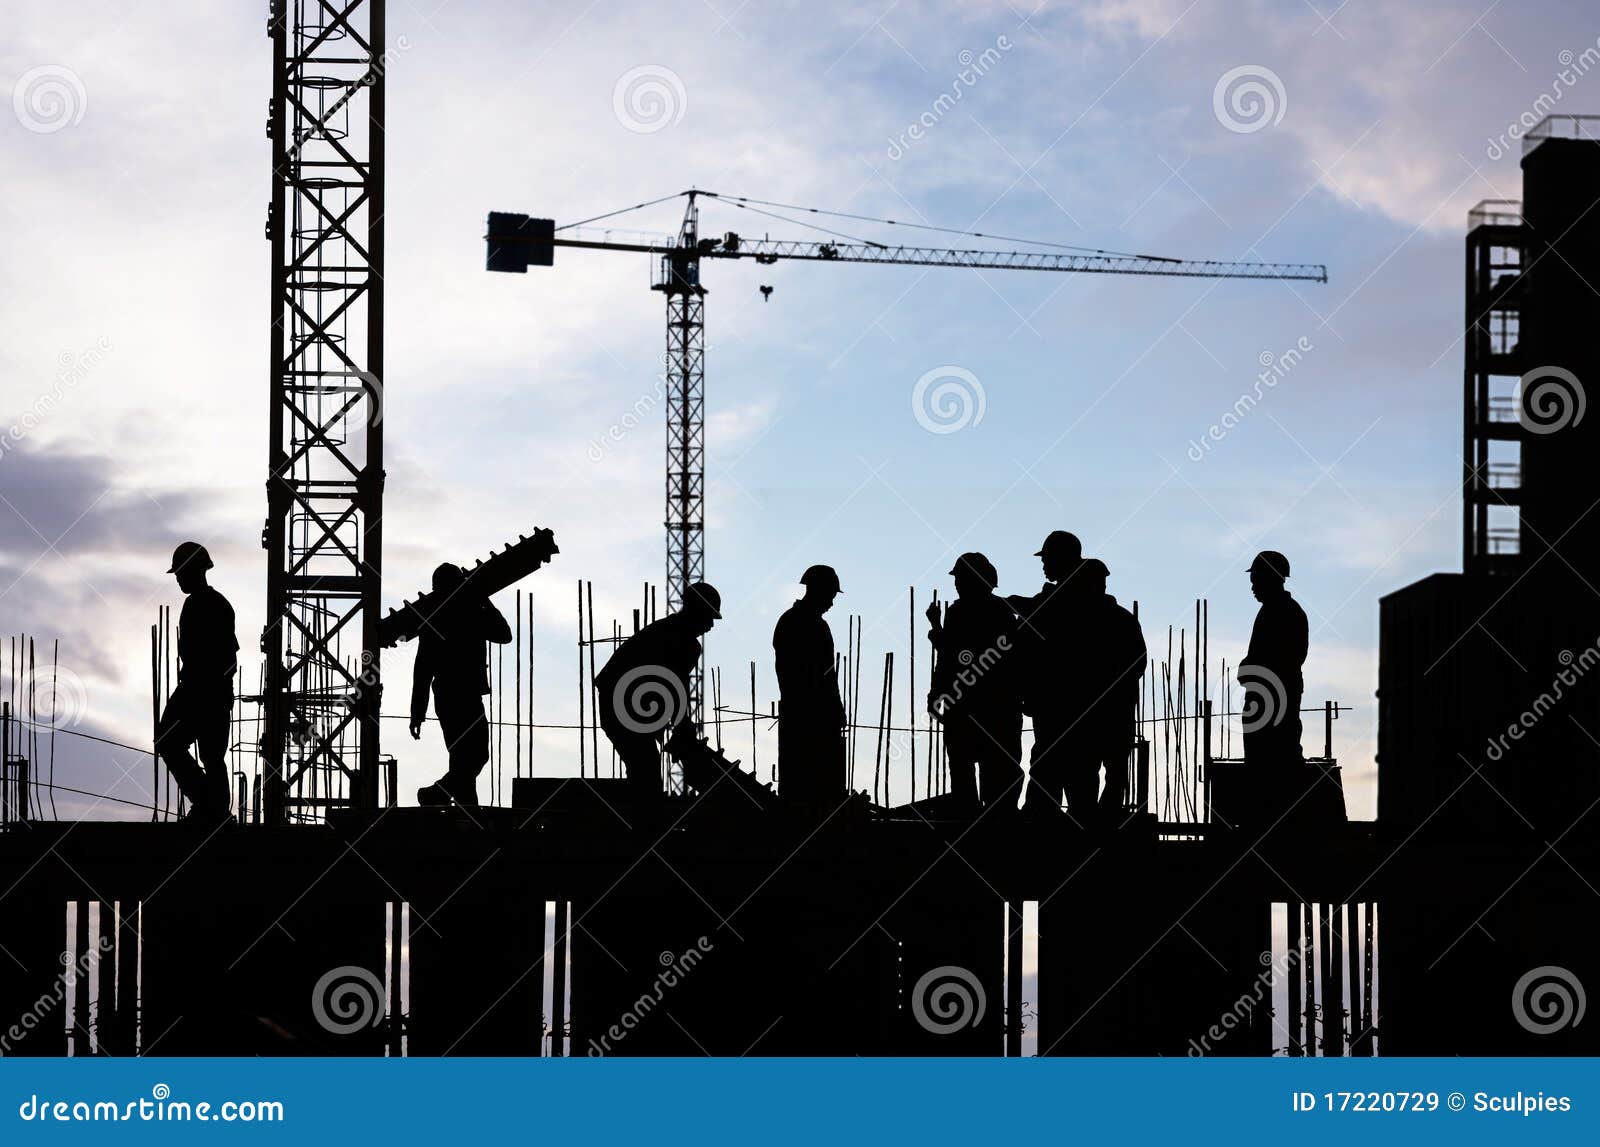 construction worker